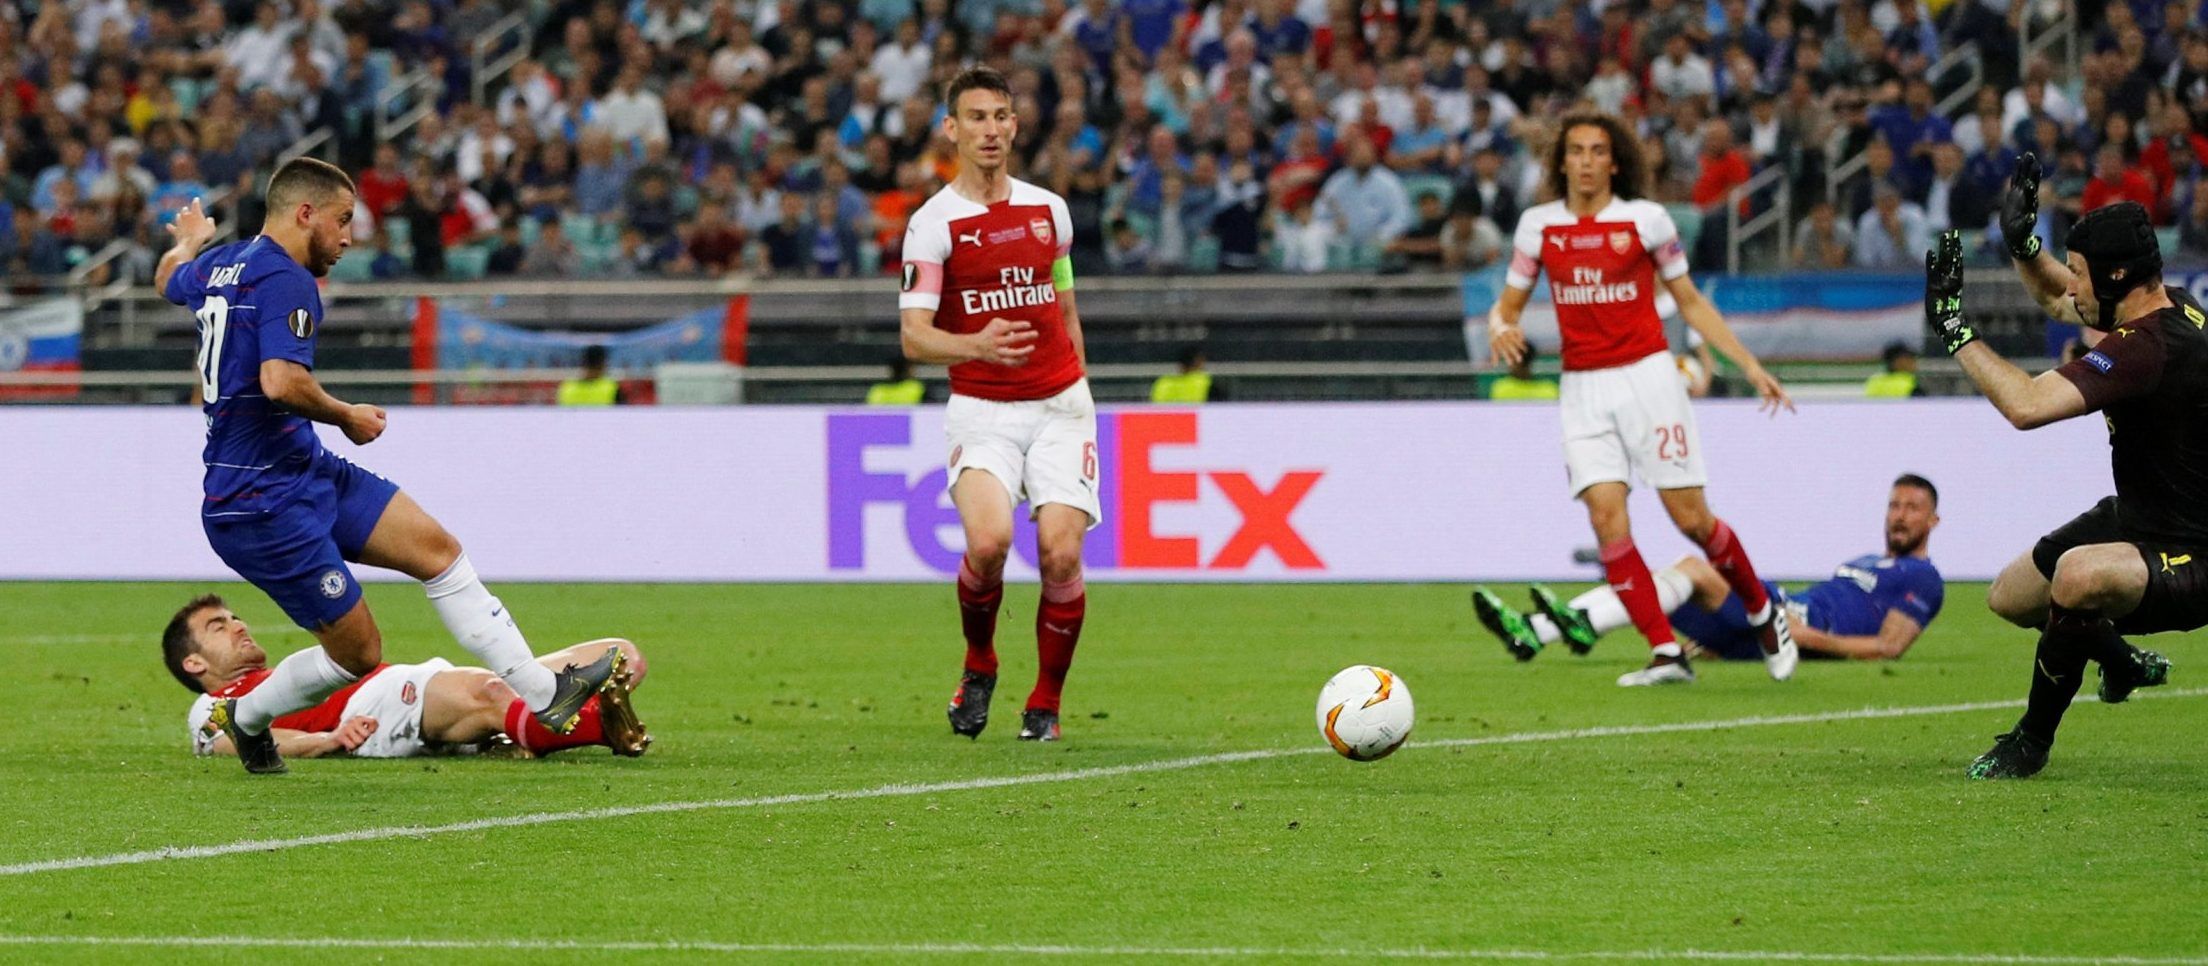 Eden Hazard scoring against Arsenal in the Europa League final